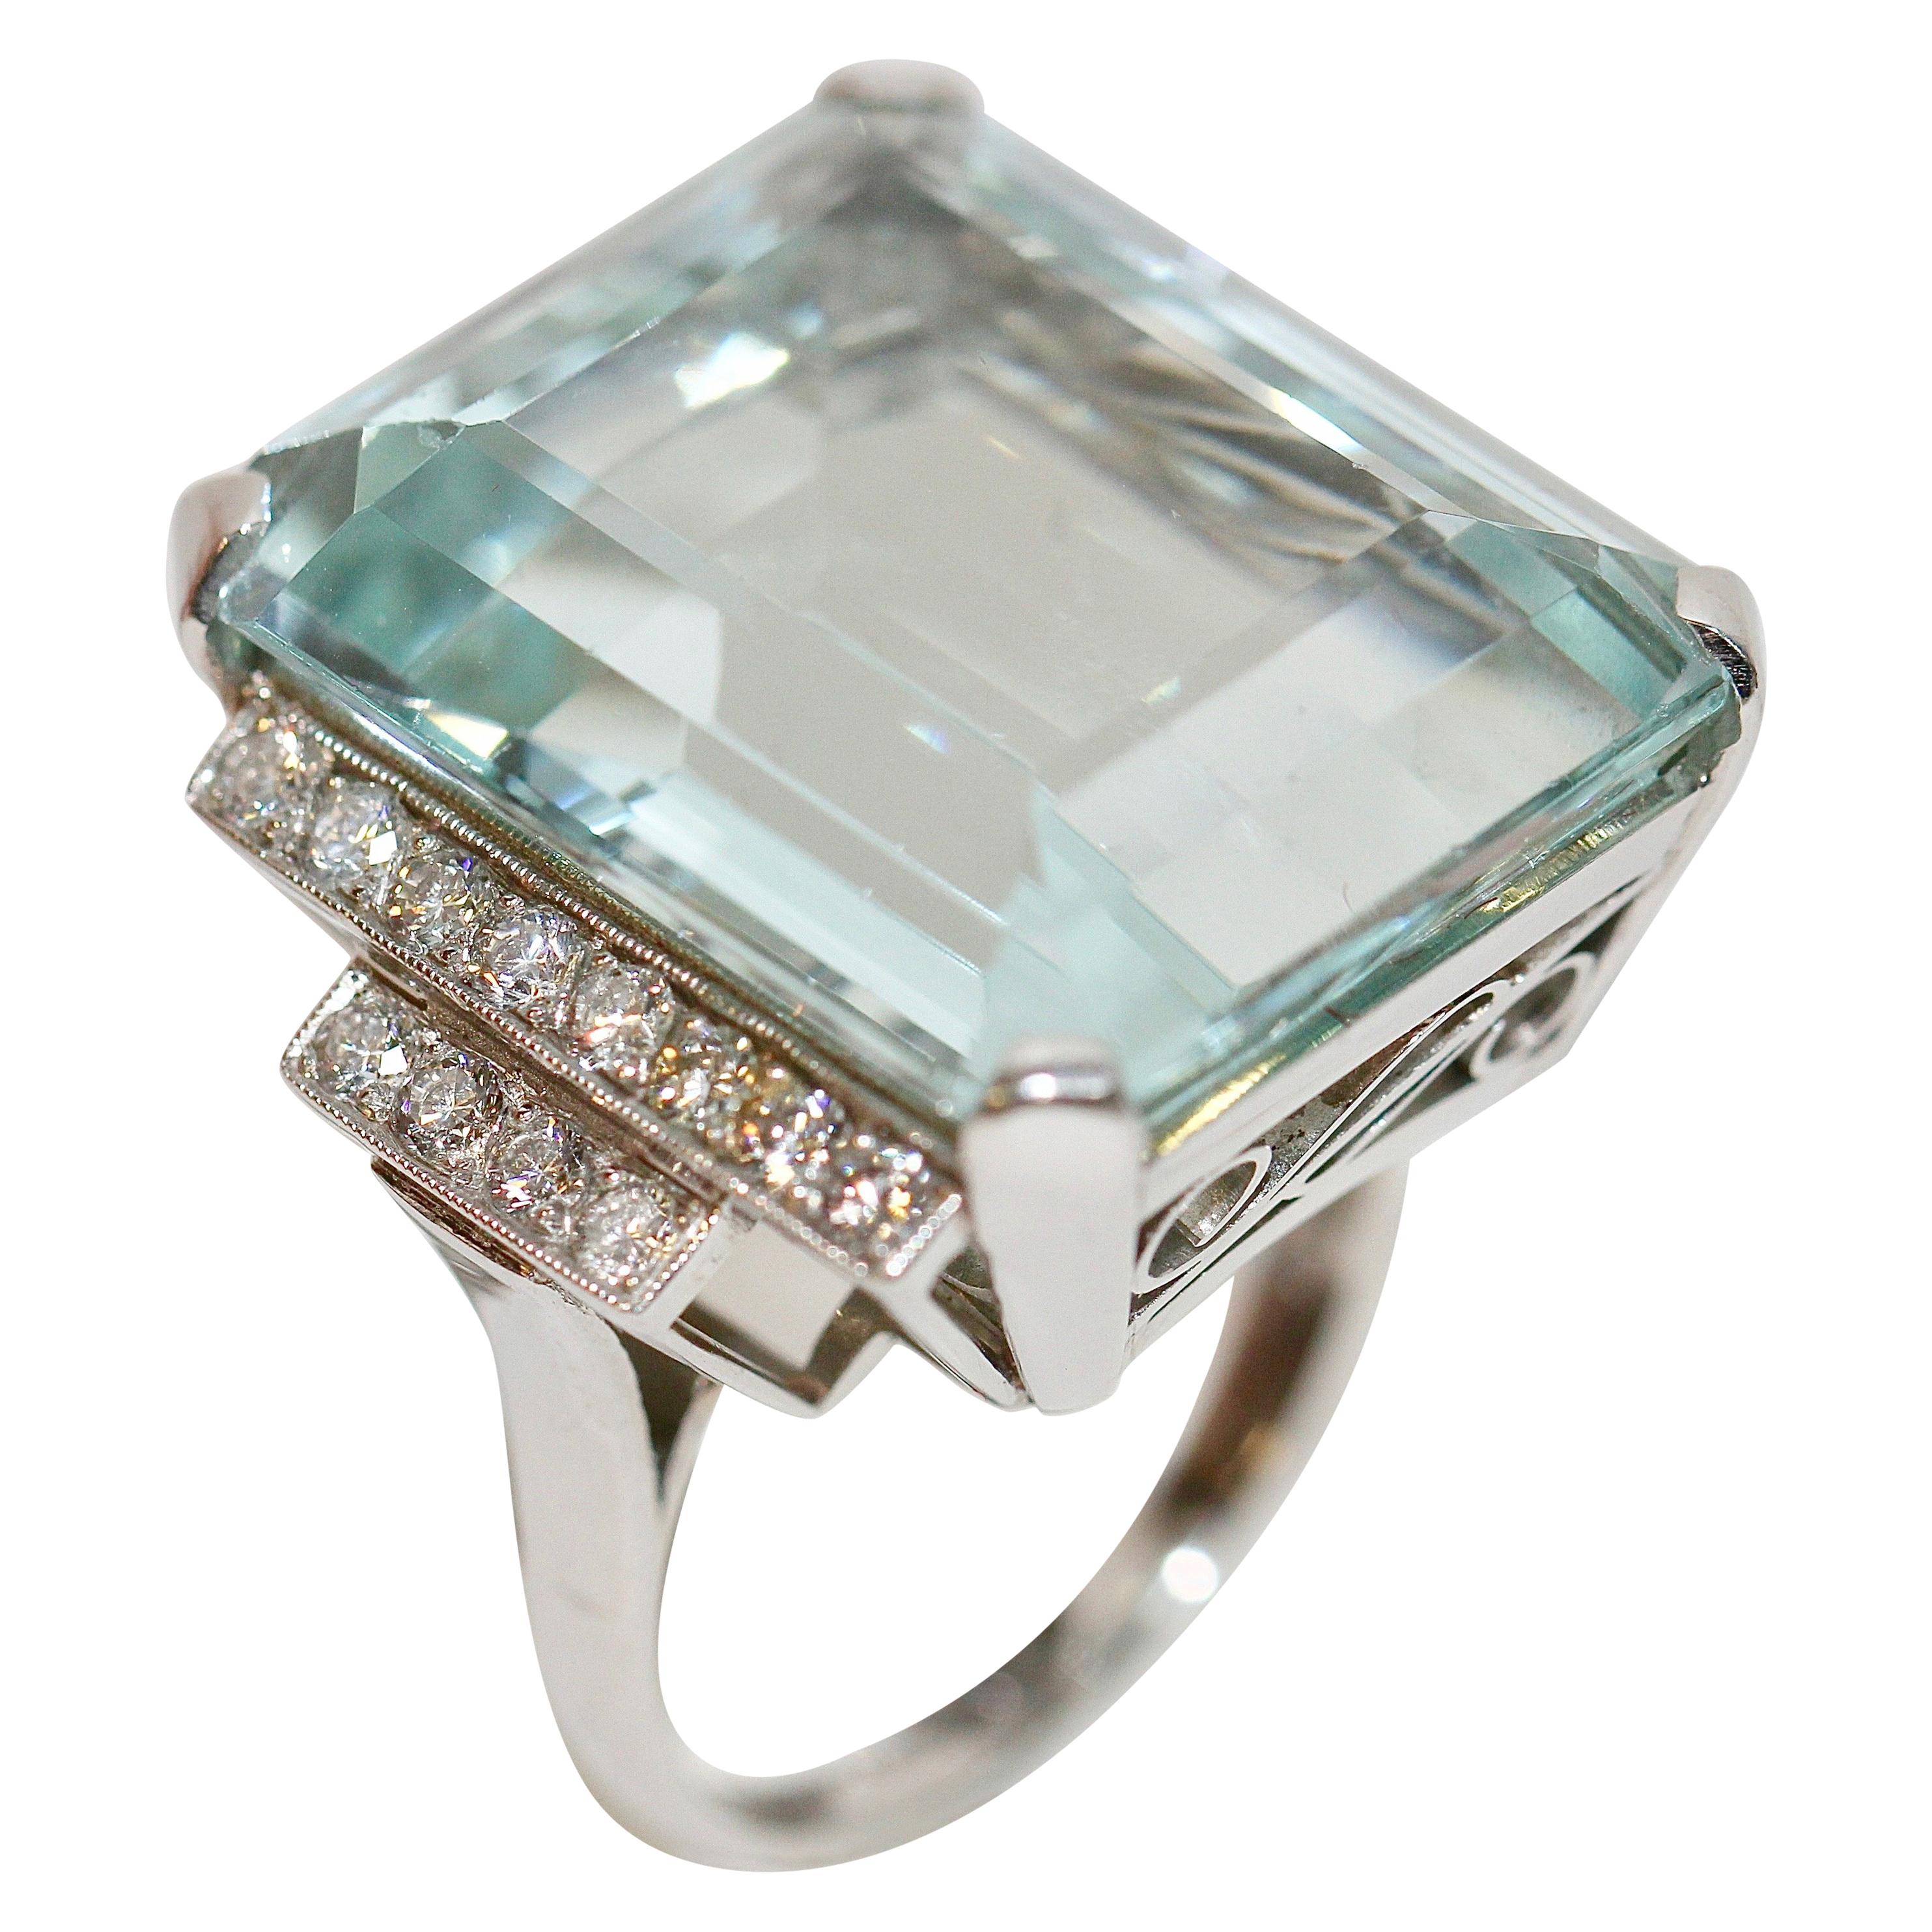 Gorgeous 950 Platinum Ring with Large 34.8ct Faceted Aquamarine and 24 Diamonds